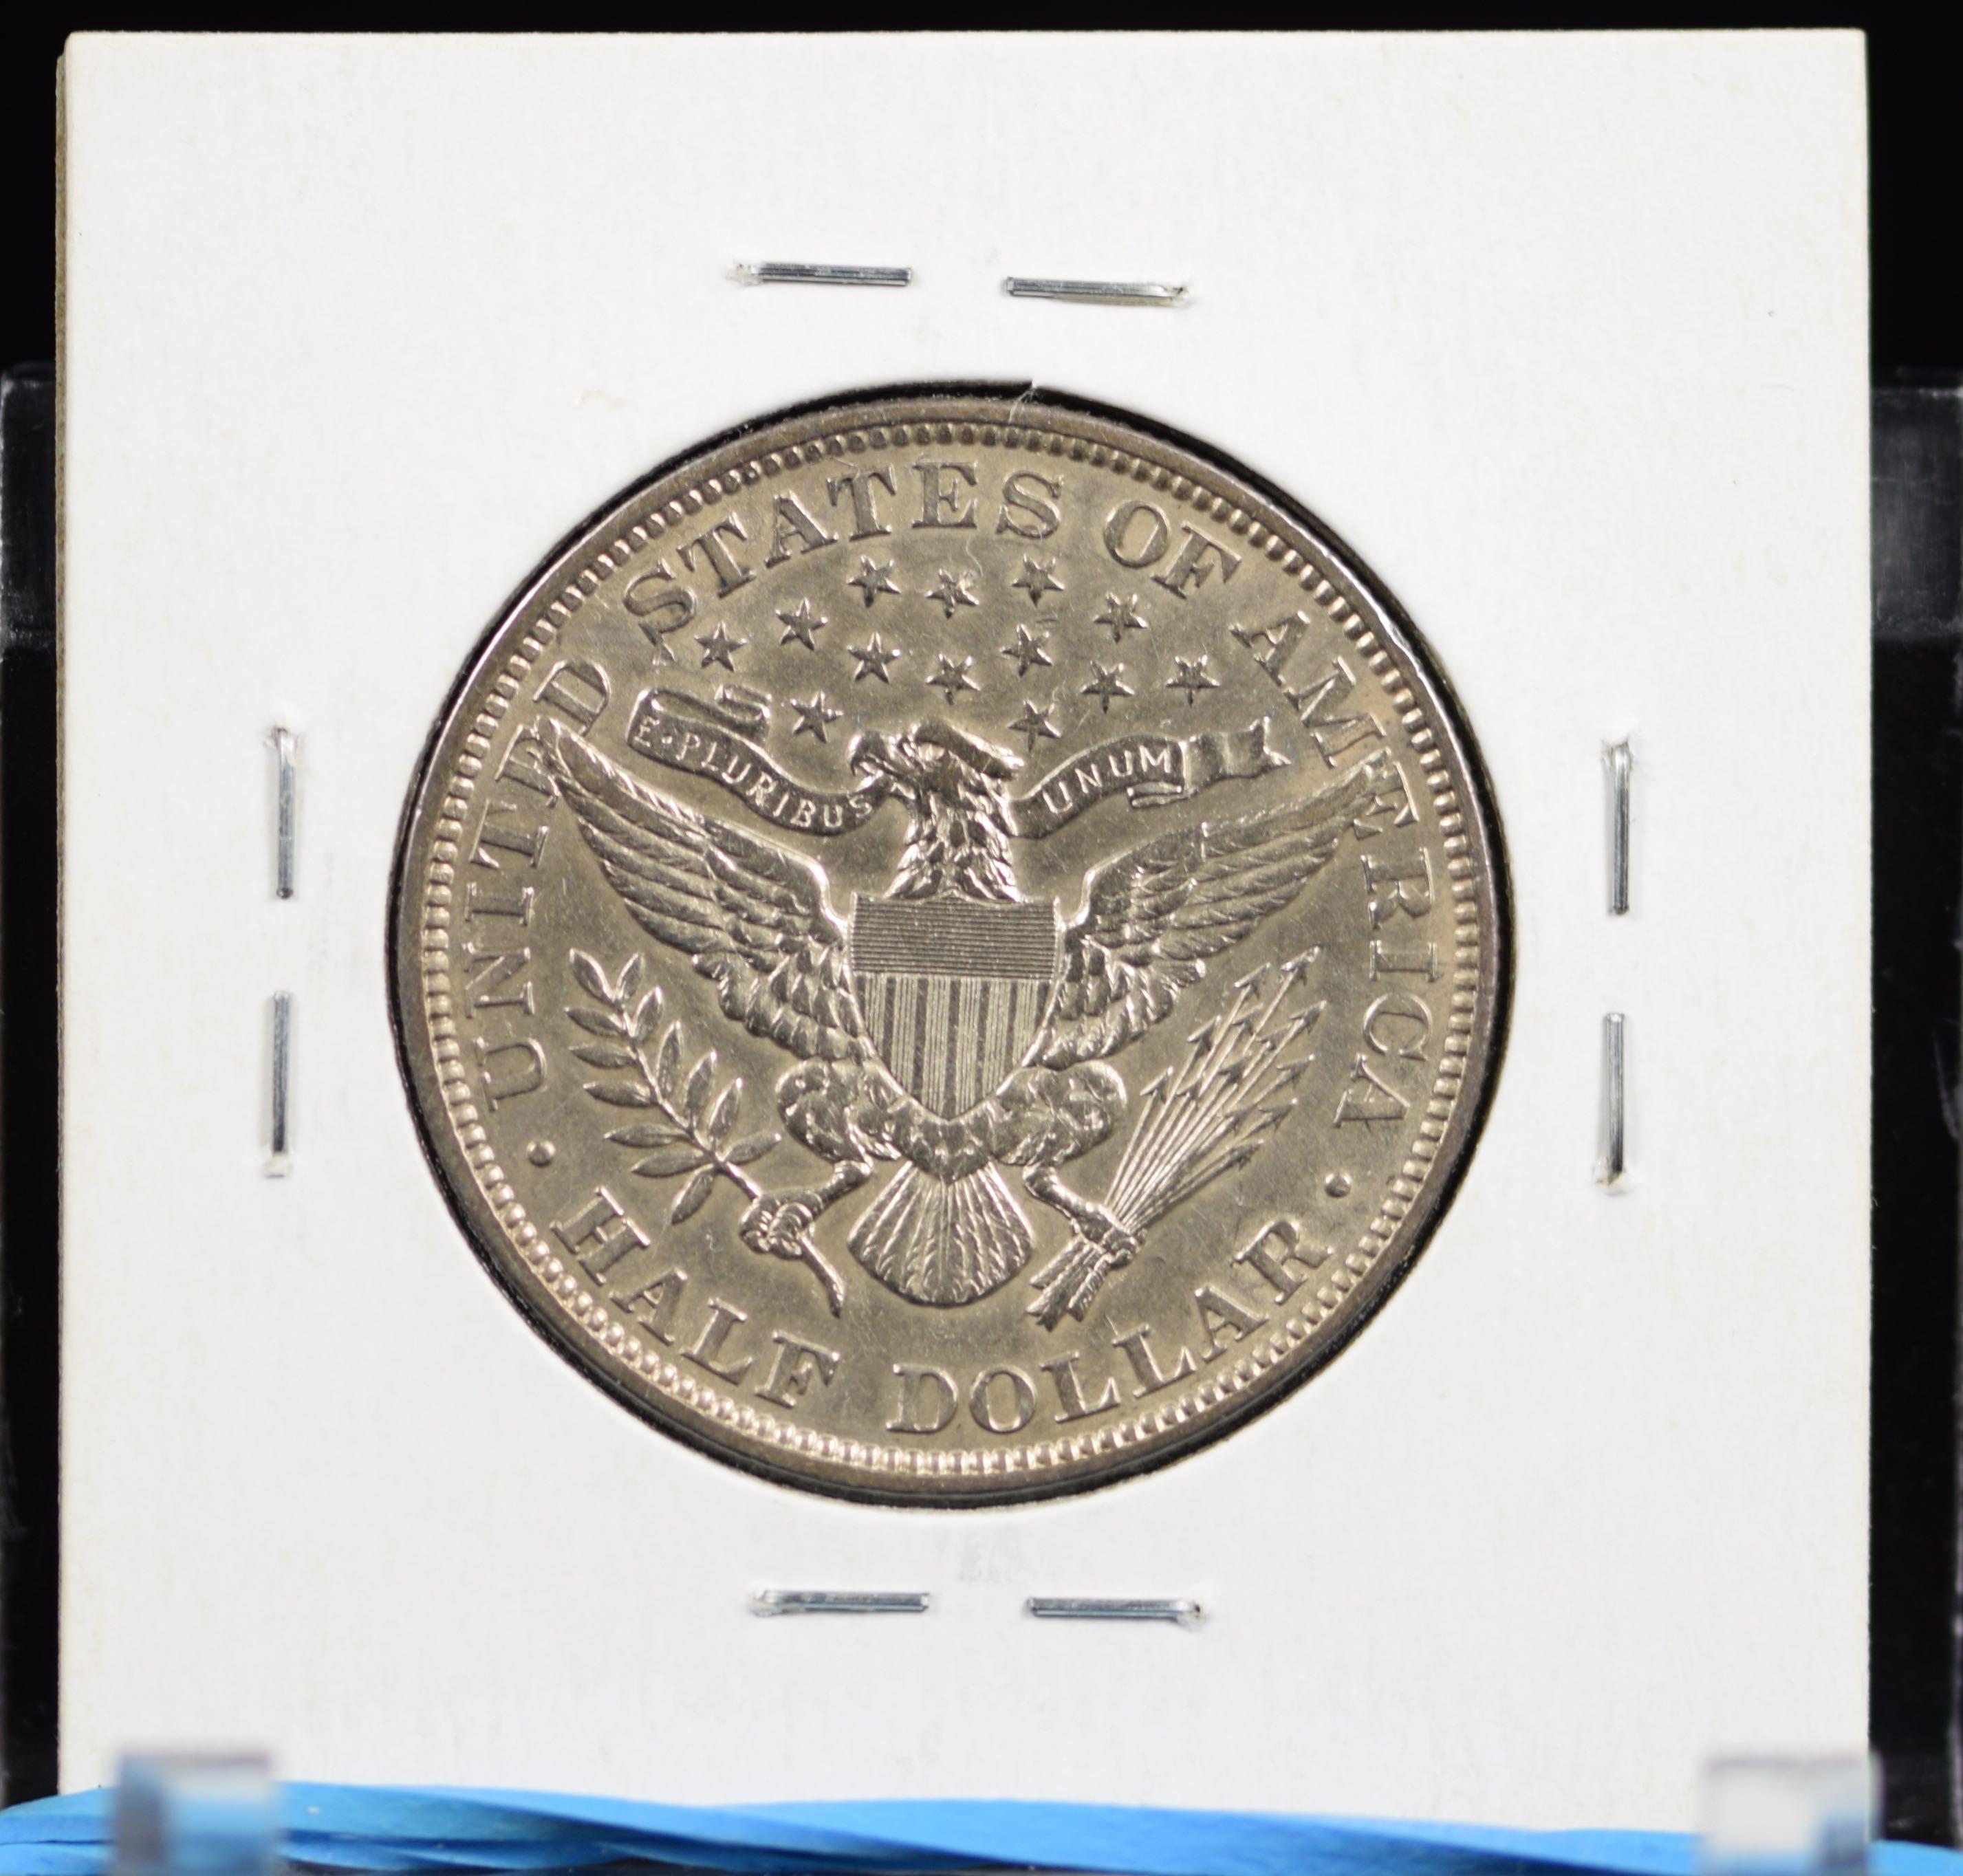 1894 Barber Half Dollar AU Plus Nice Coin